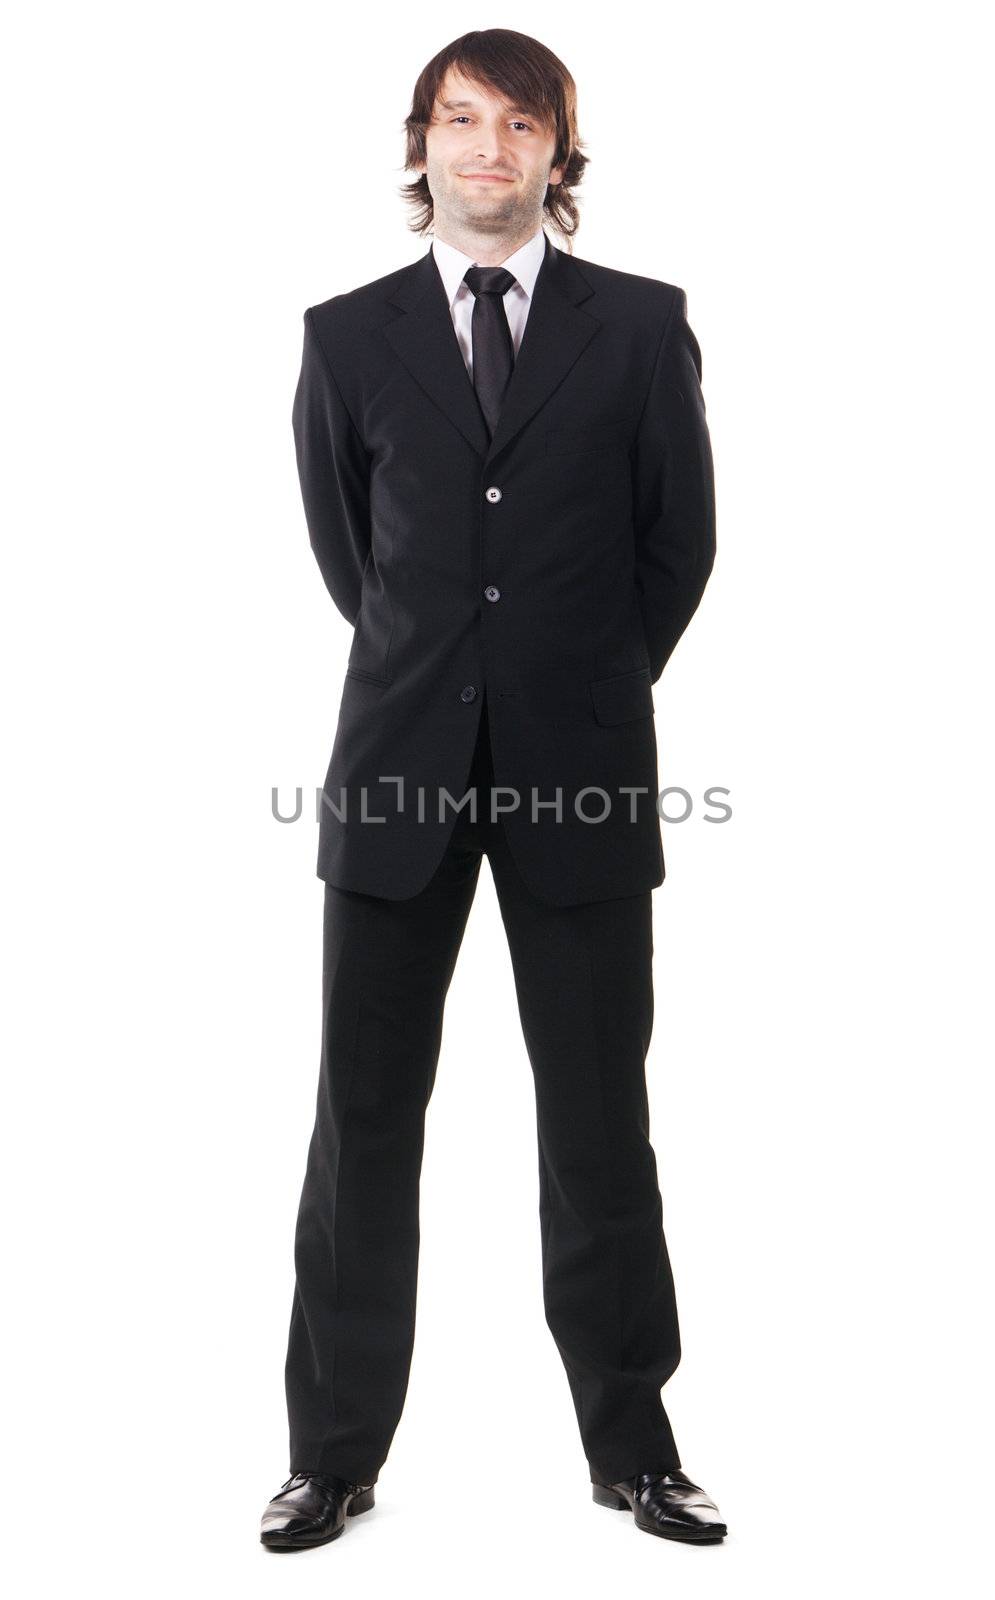 Elegant man in black suit against white background 